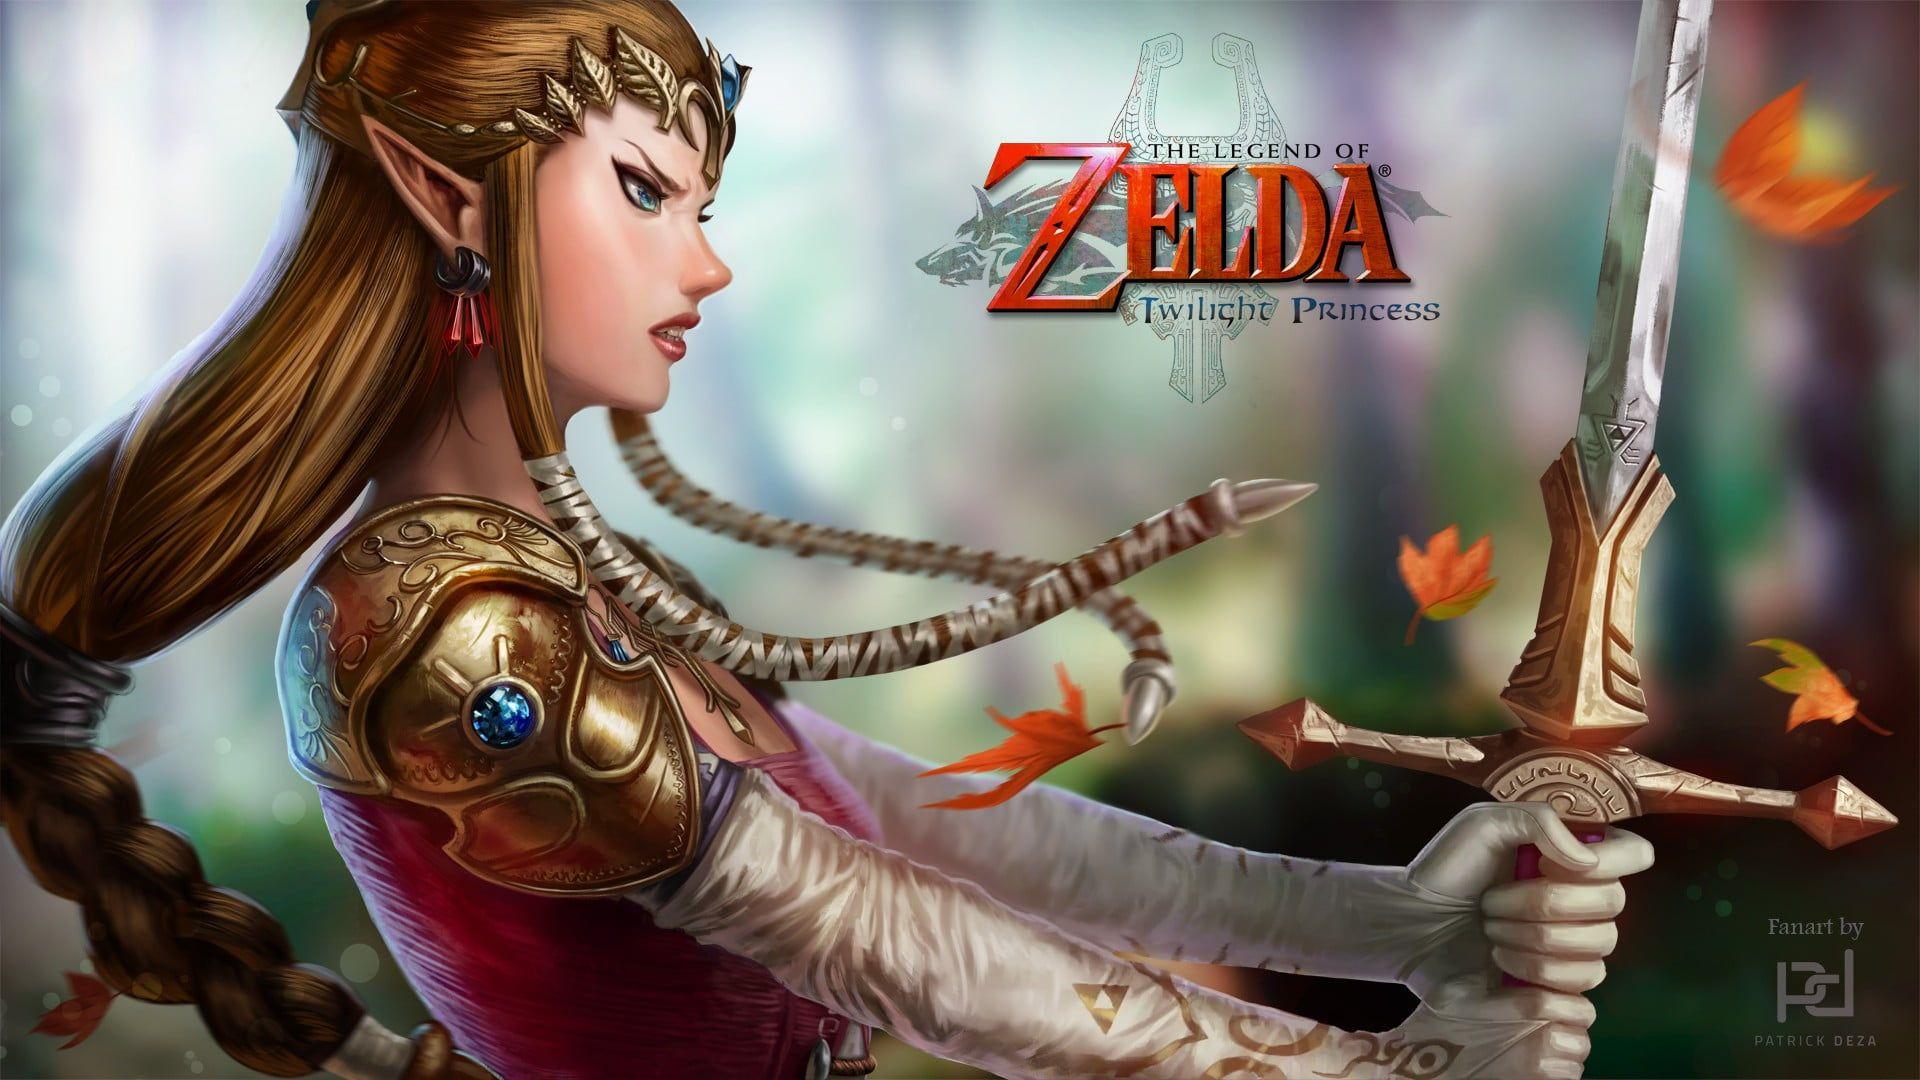 Midna Link The Legend of Zelda Twilight Princess The Legend of Zelda  Furry HD Wallpapers  Desktop and Mobile Images  Photos